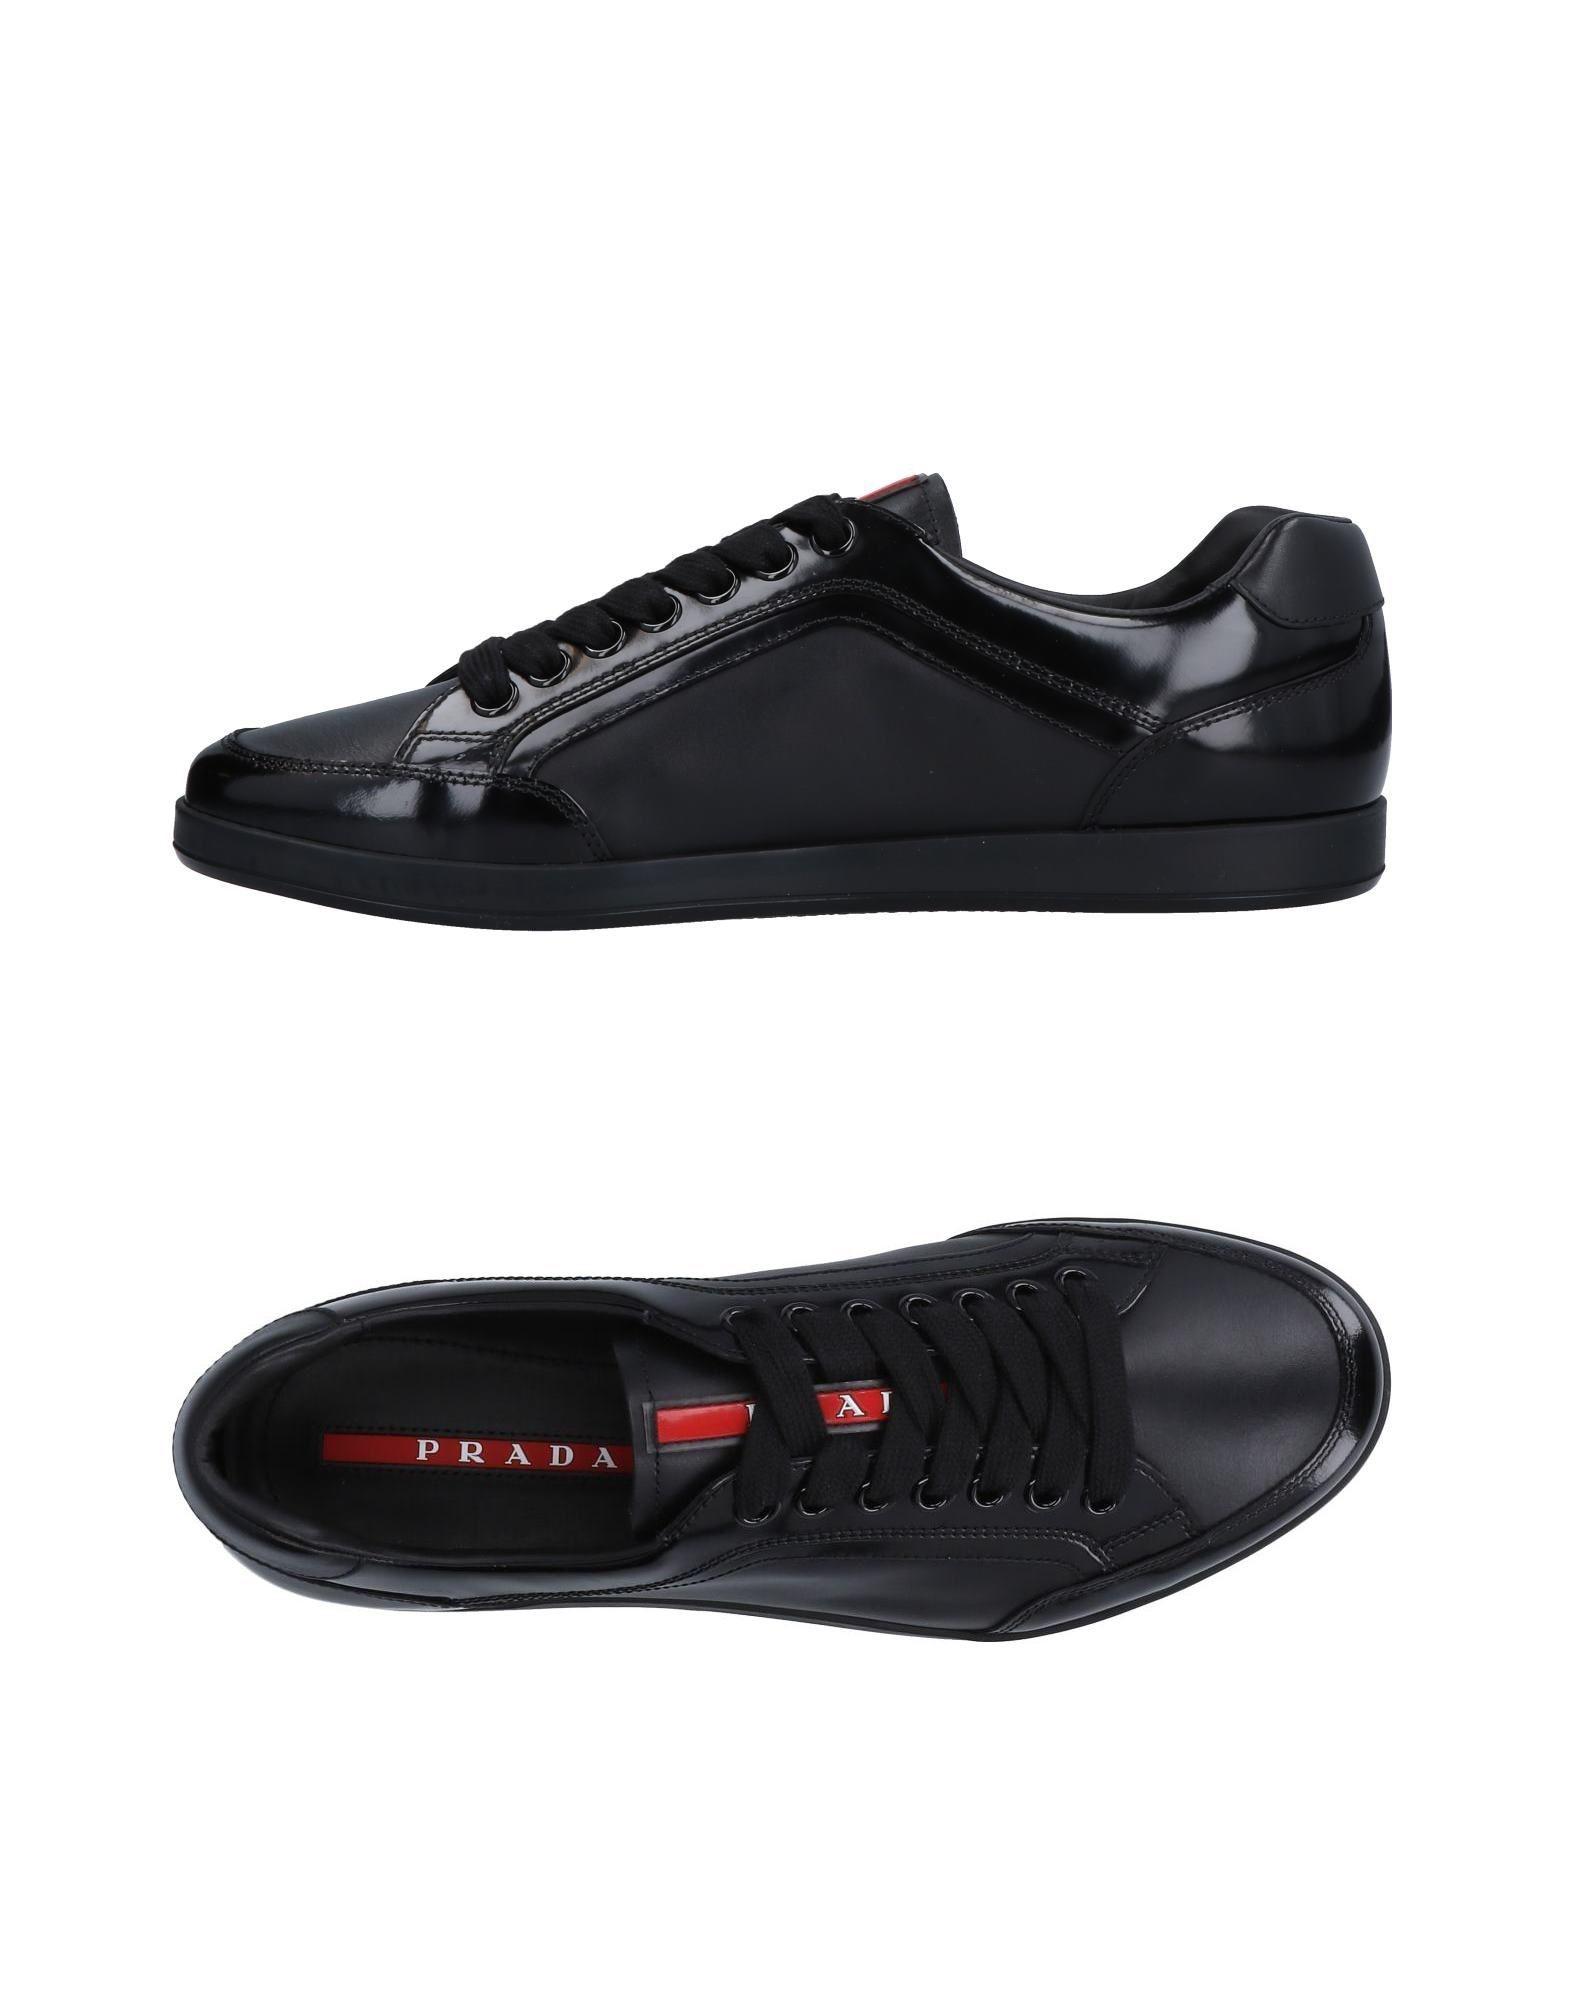 Prada Sport Leather Low-tops & Sneakers in Black for Men - Lyst